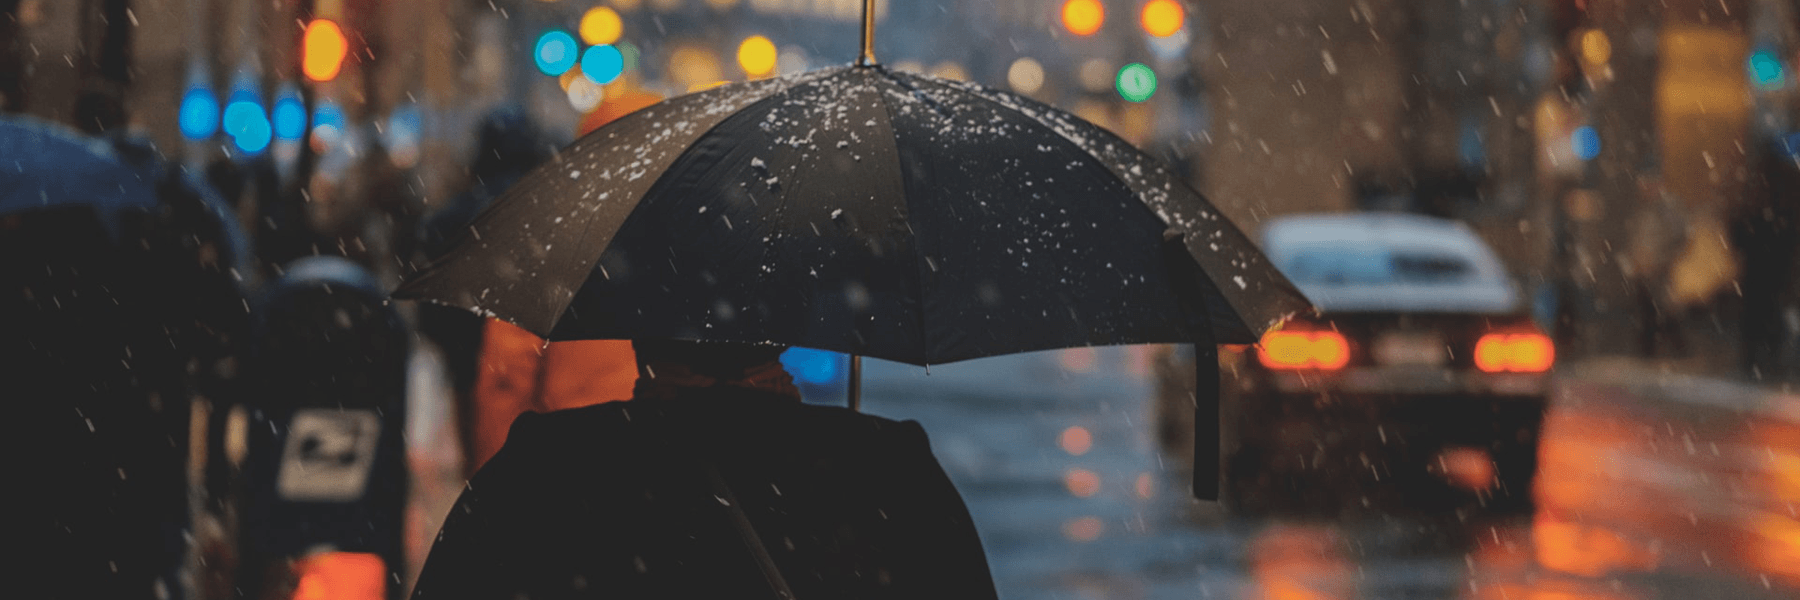 Link to article. A person walking with an umbrella on a rainy city sreet. Photo courtesy Osman Rana on Unsplash.com